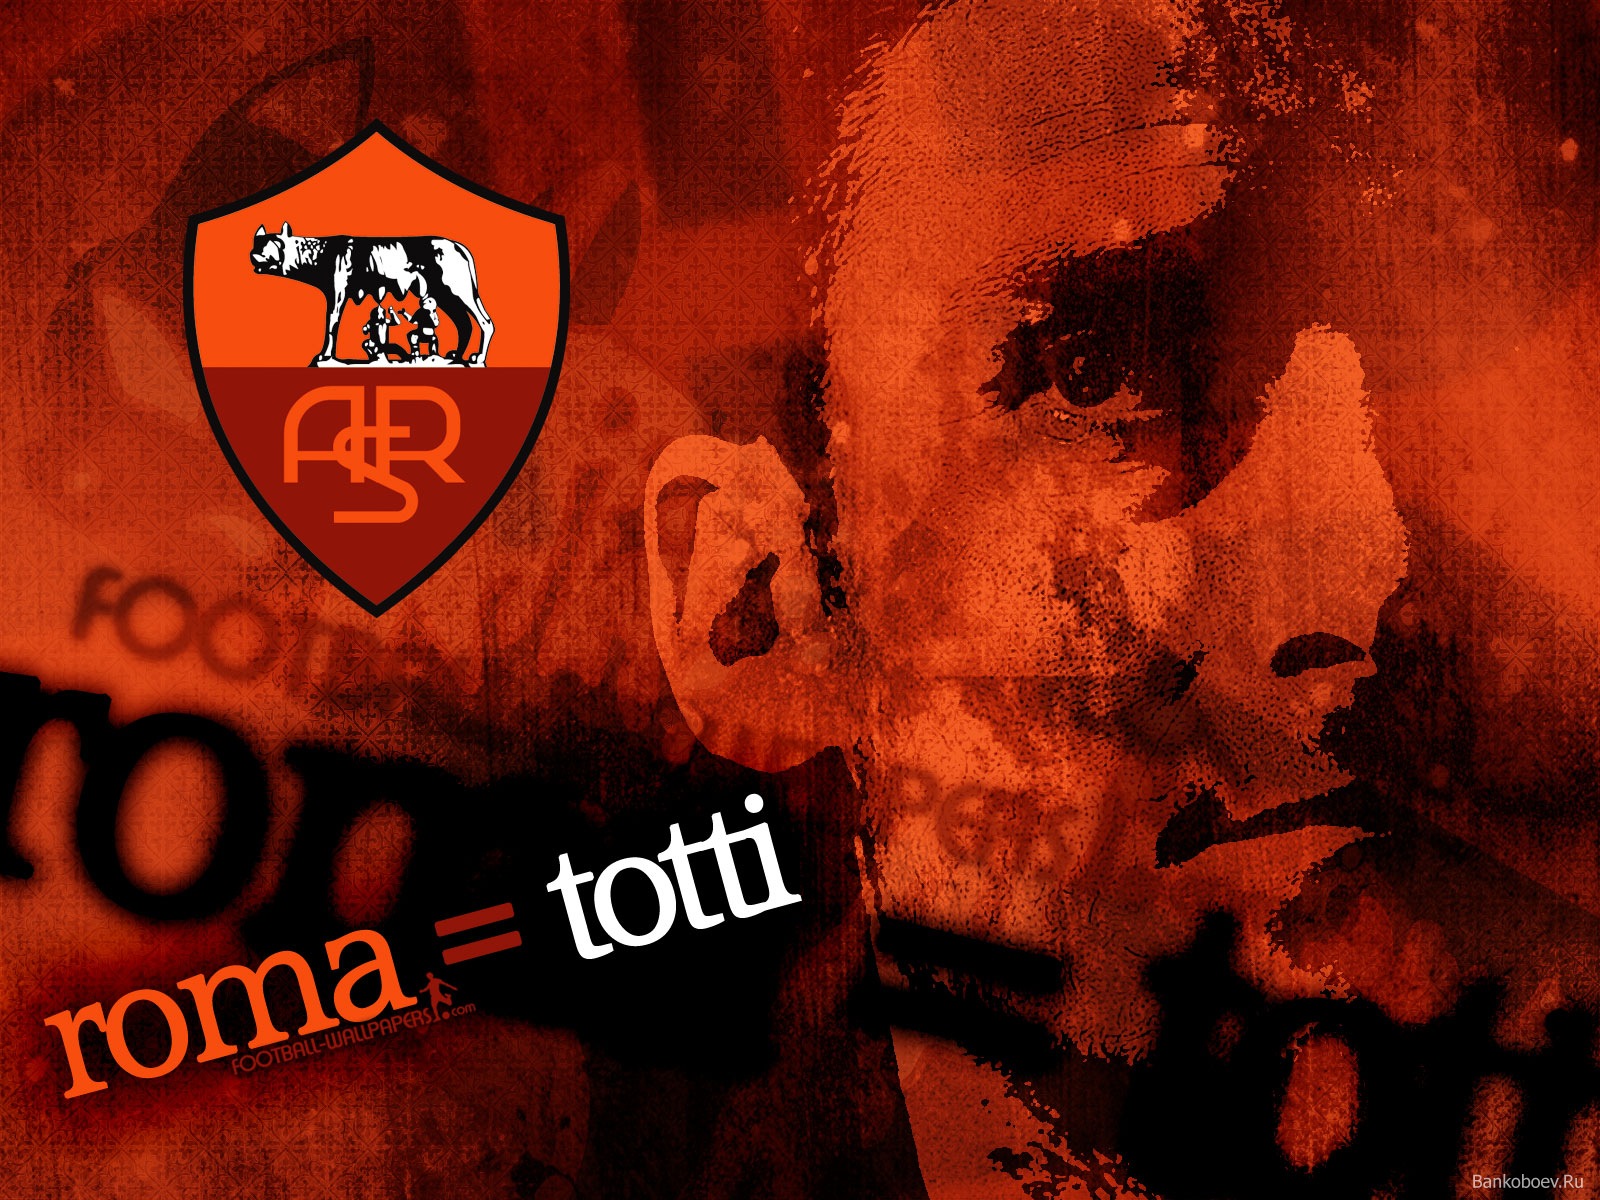 Ban tim mot dau si trong hinh hai nha vua, nguoi Roma goi ten Francesco Totti5